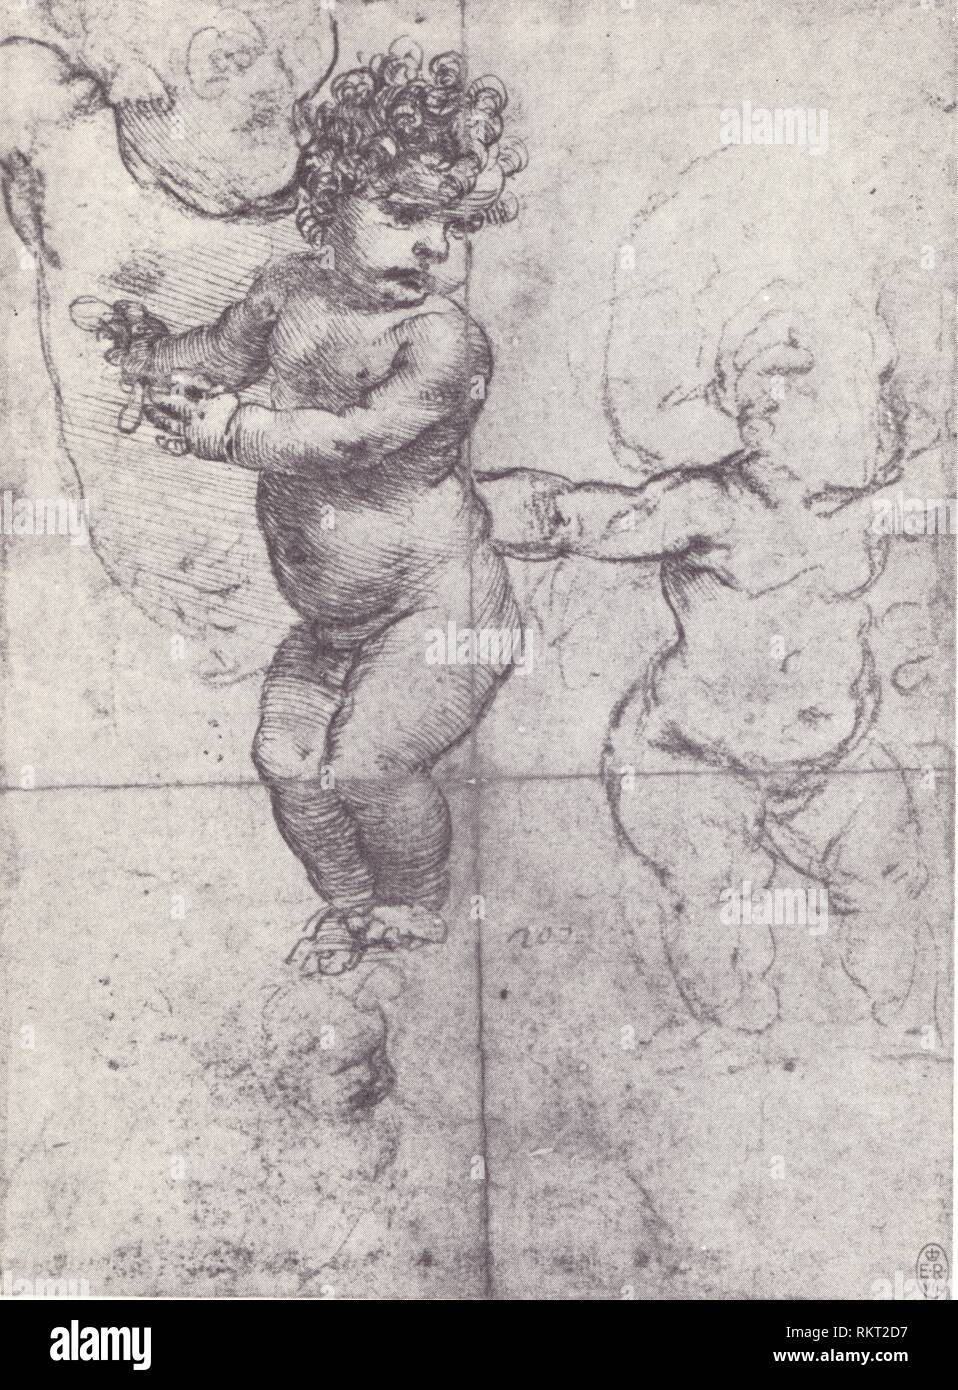 UNTERSUCHUNGEN AN KINDERN. LEONARDO DA VINCI. 1505-1506 Stockfoto